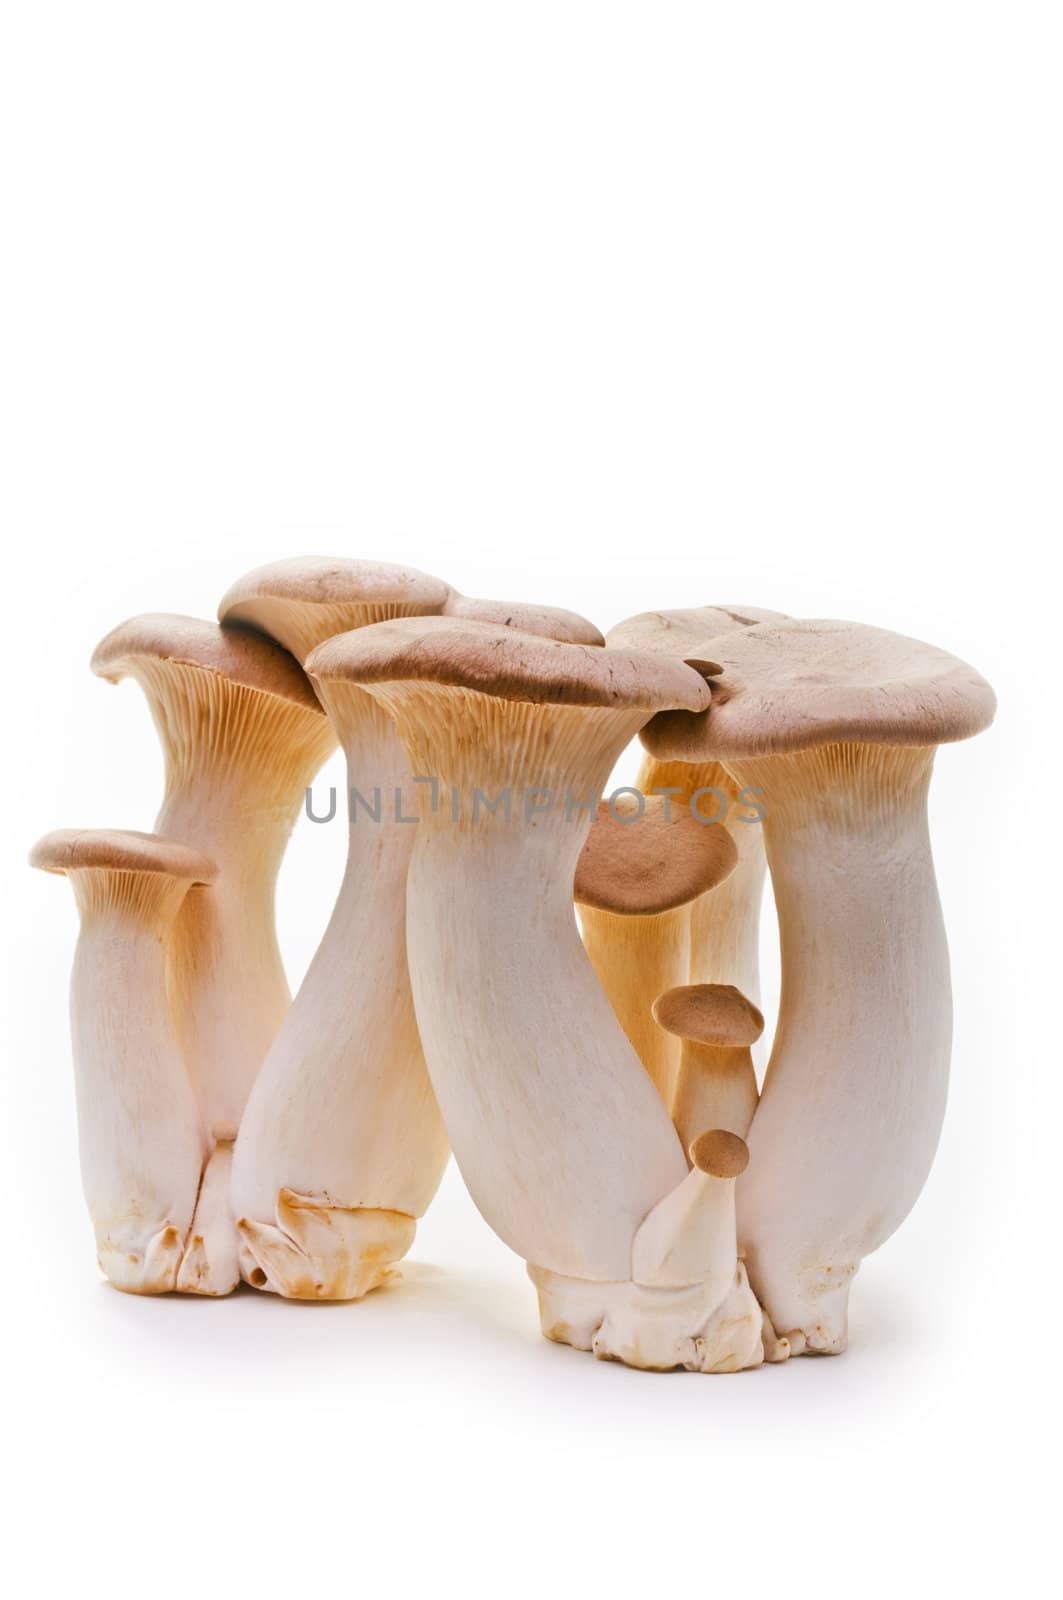 King trumpet. Fresh mushrooms on a white background. by lobzik